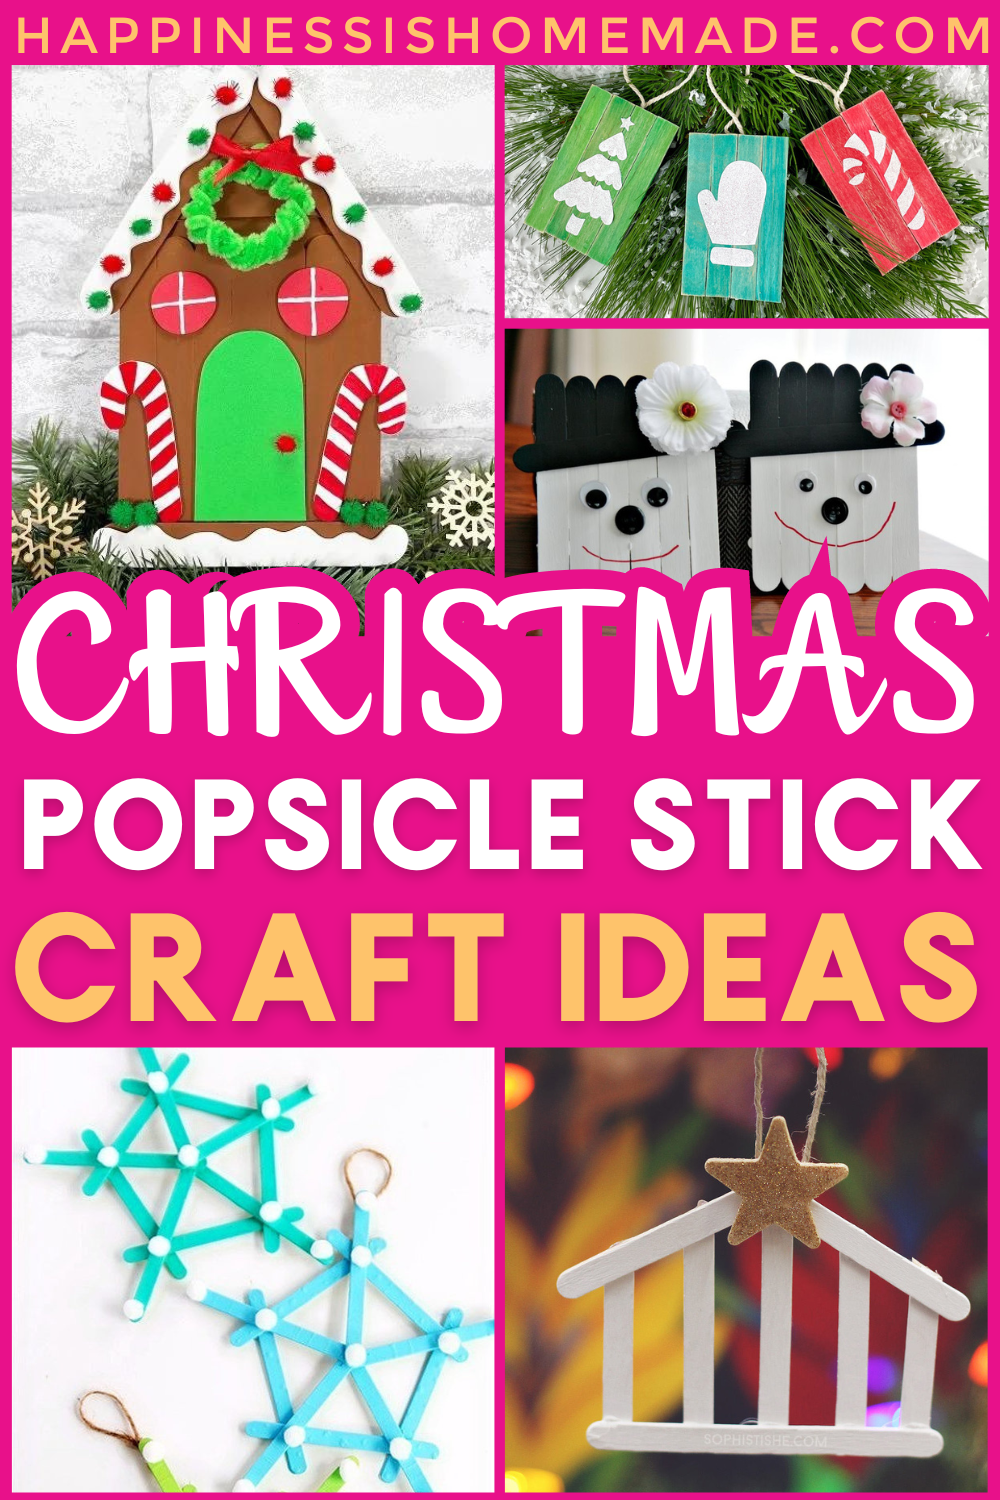 Popsicle Stick Nutcracker - The Best Ideas for Kids